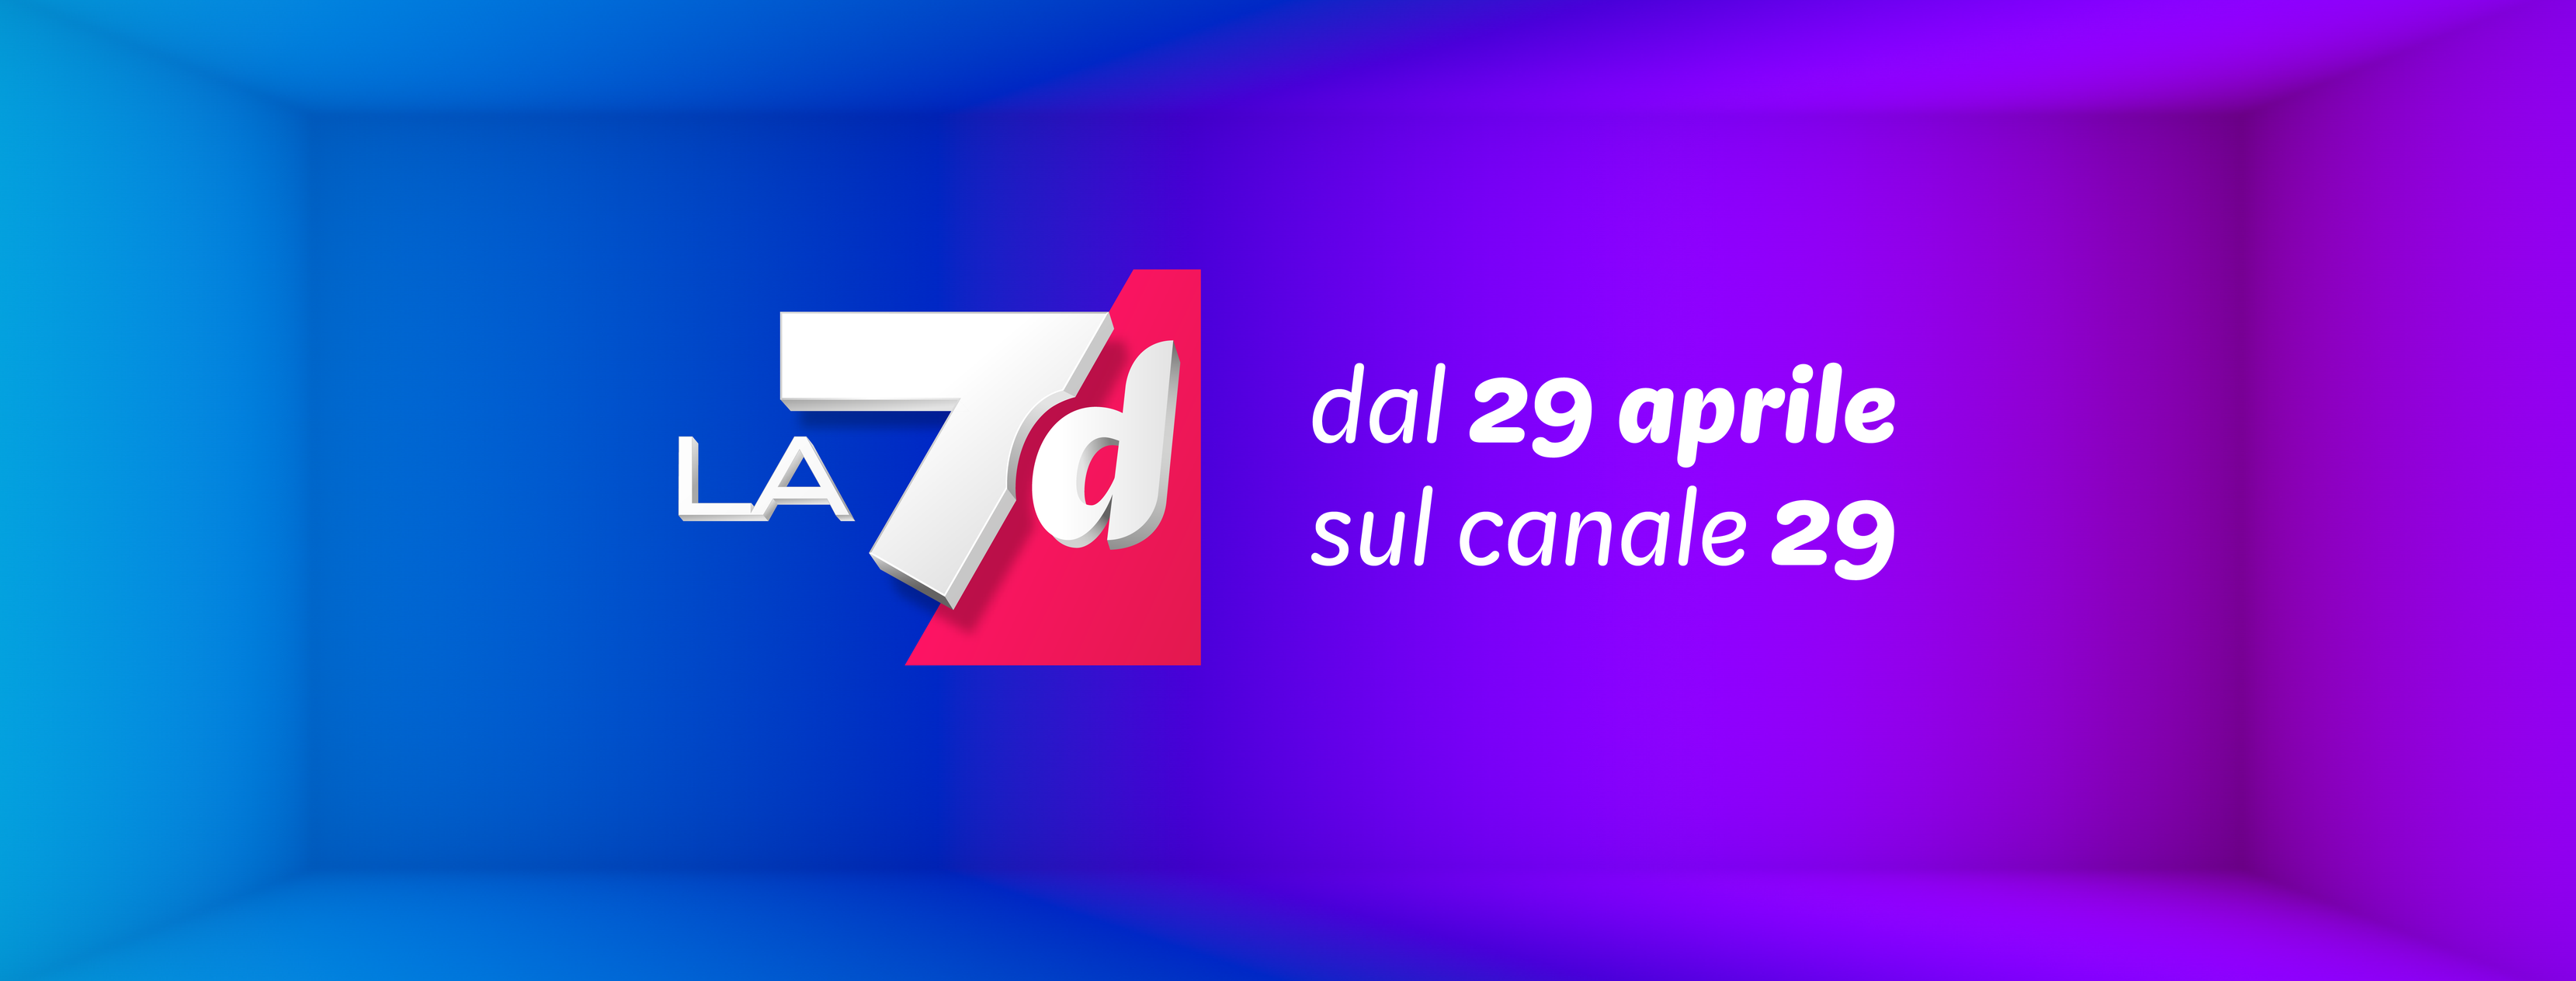 La7d nuovo logo